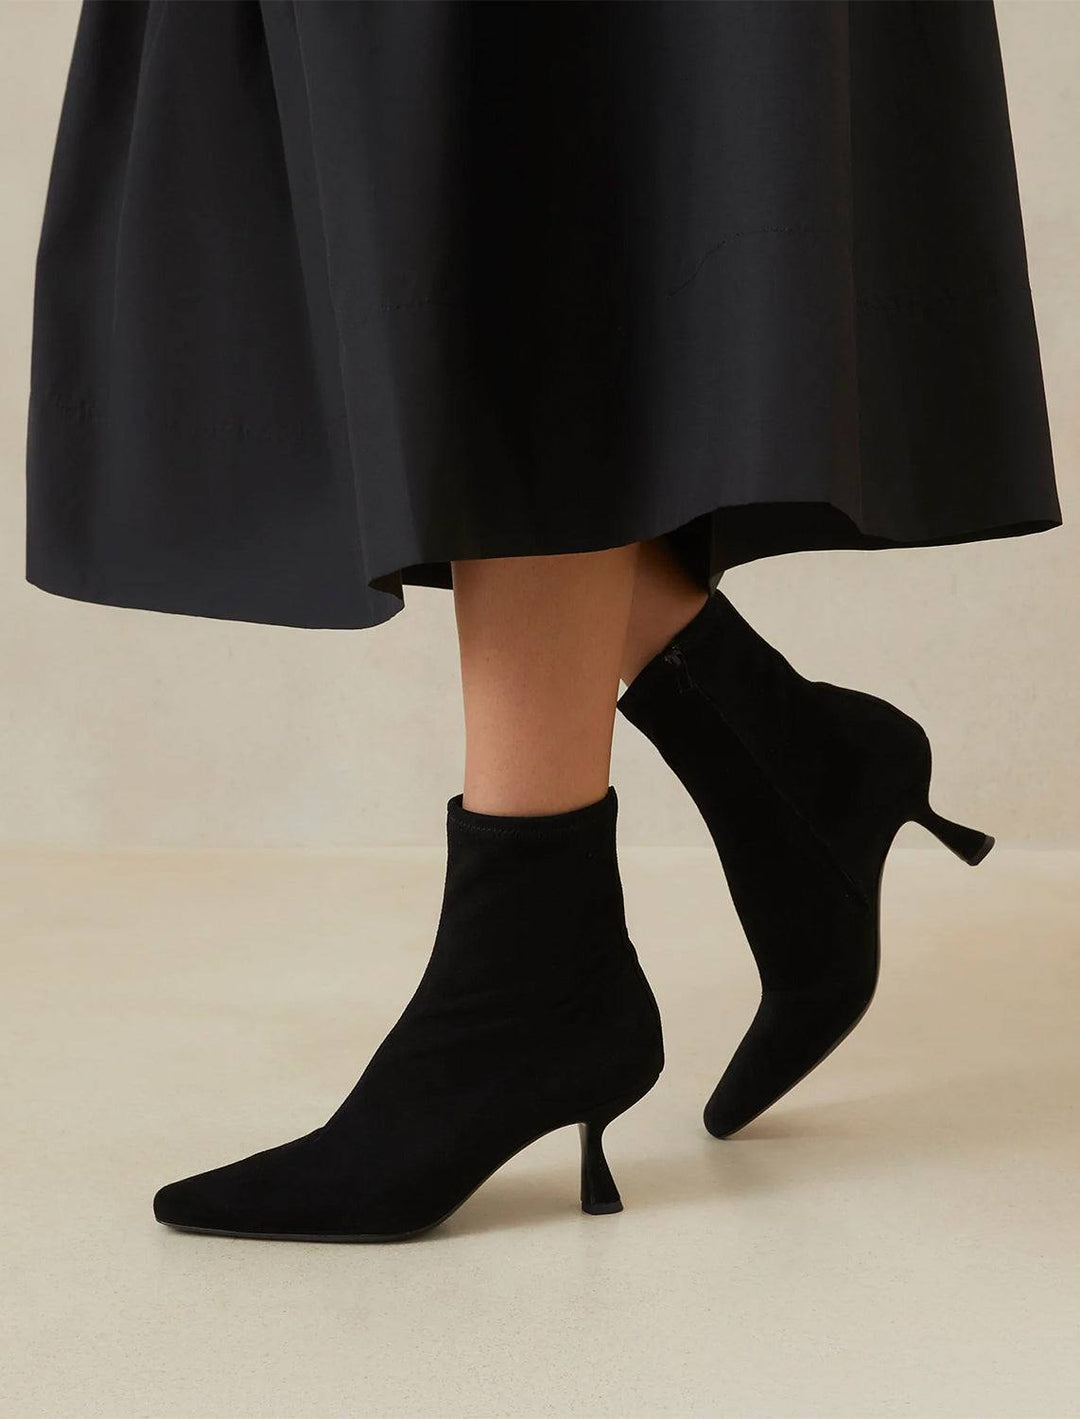 Model wearing Loeffler Randall's thandy boot in black.